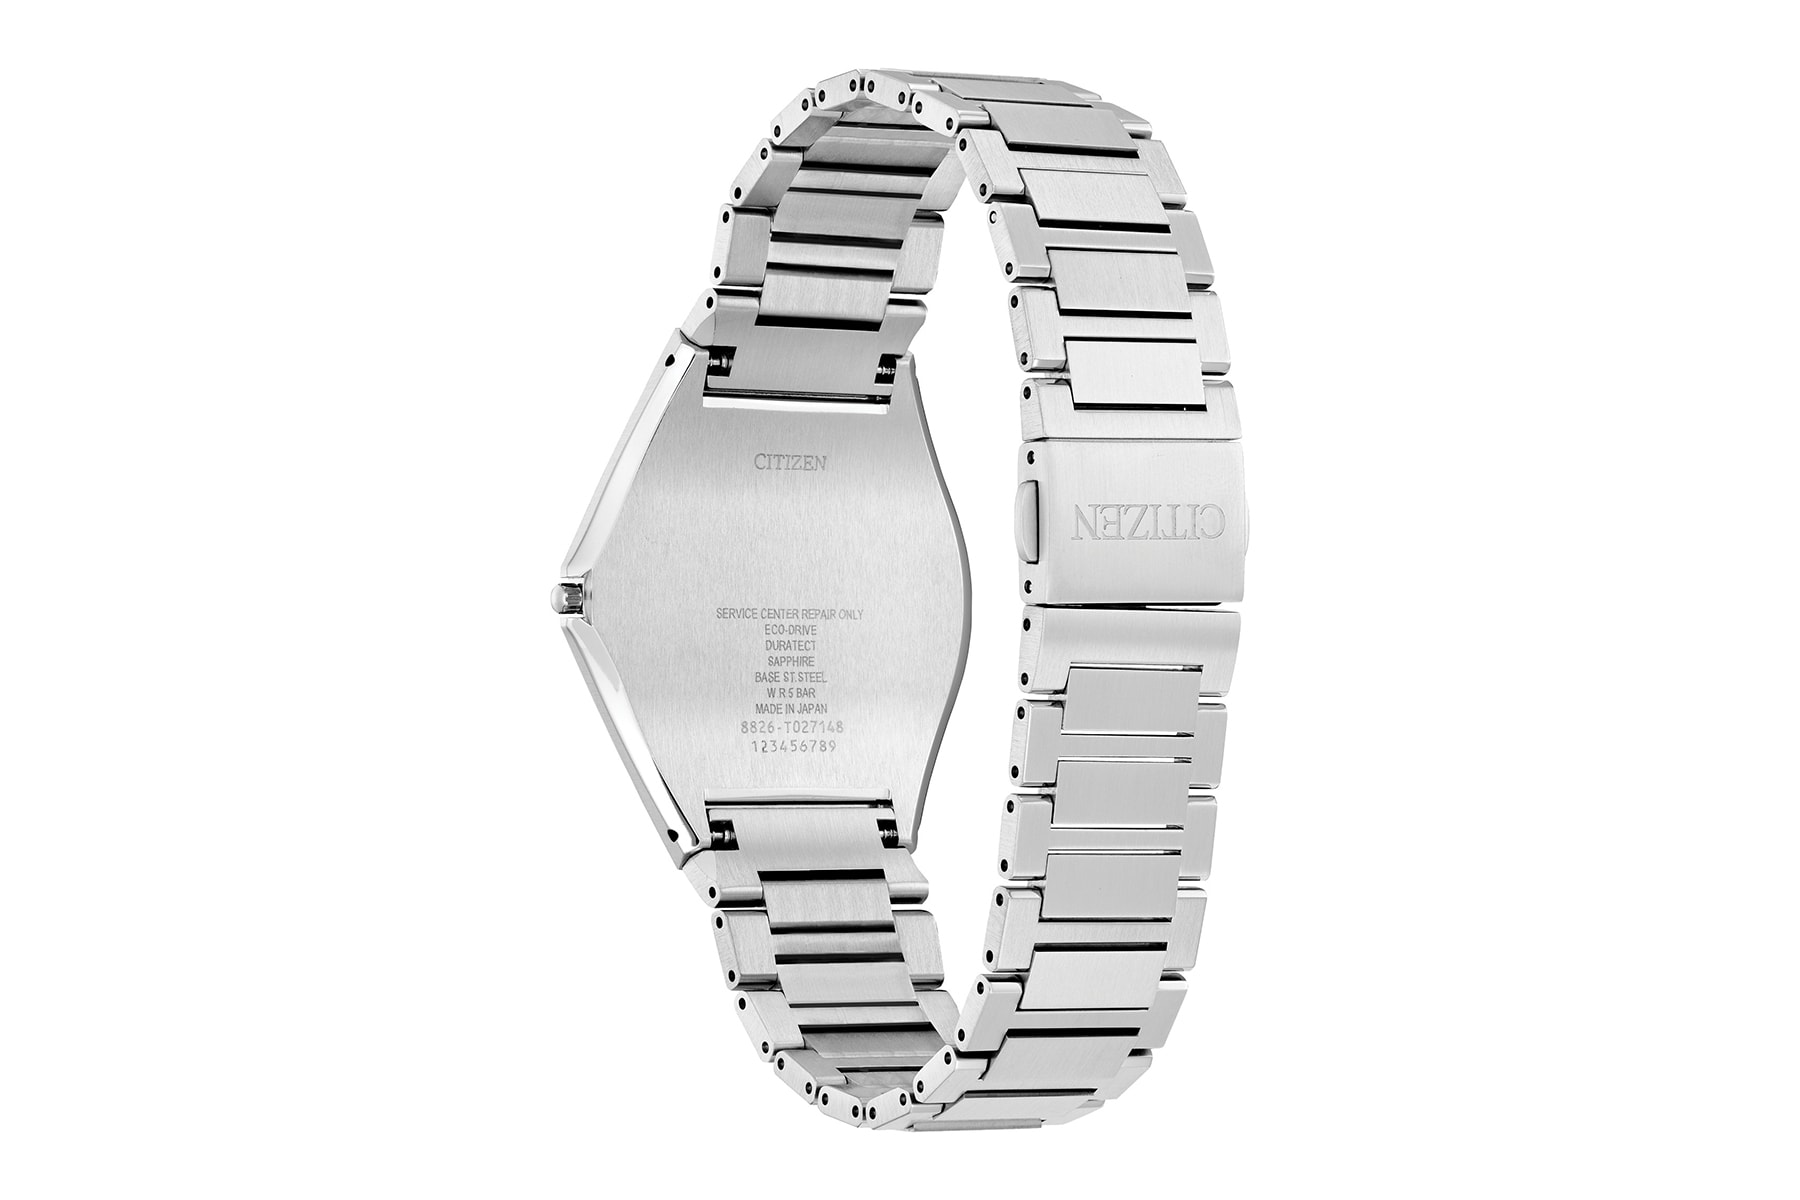 citizen watch Eco-Drive One AR5060-58E release watches quartz mechanical Japan thin 